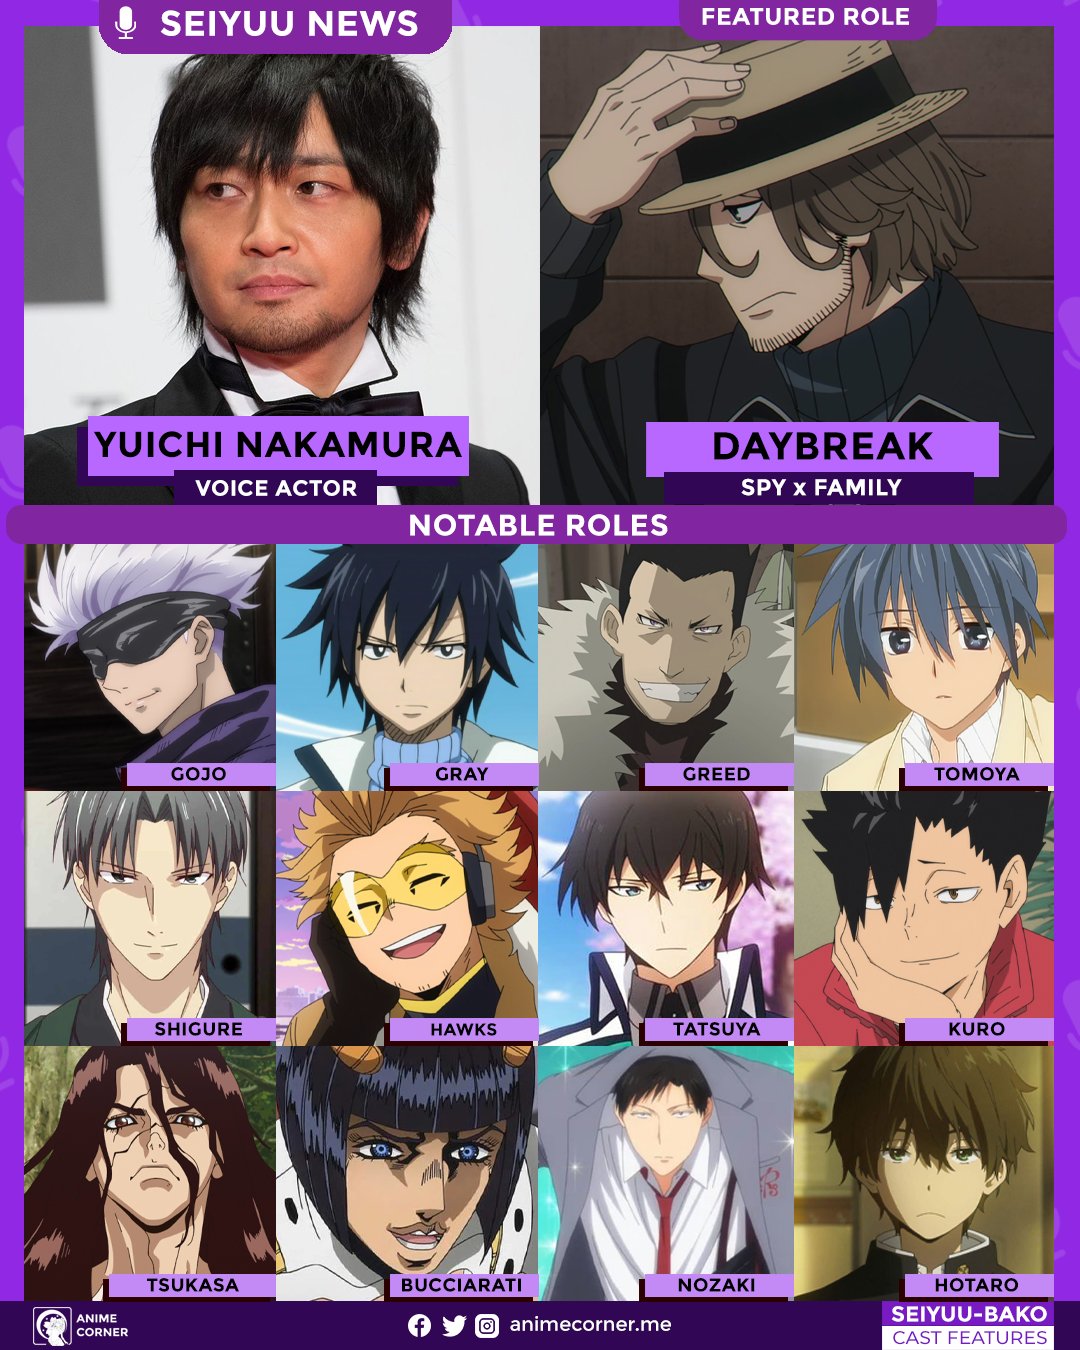 yuuichi nakamura  Anime, Anime images, Voice actor